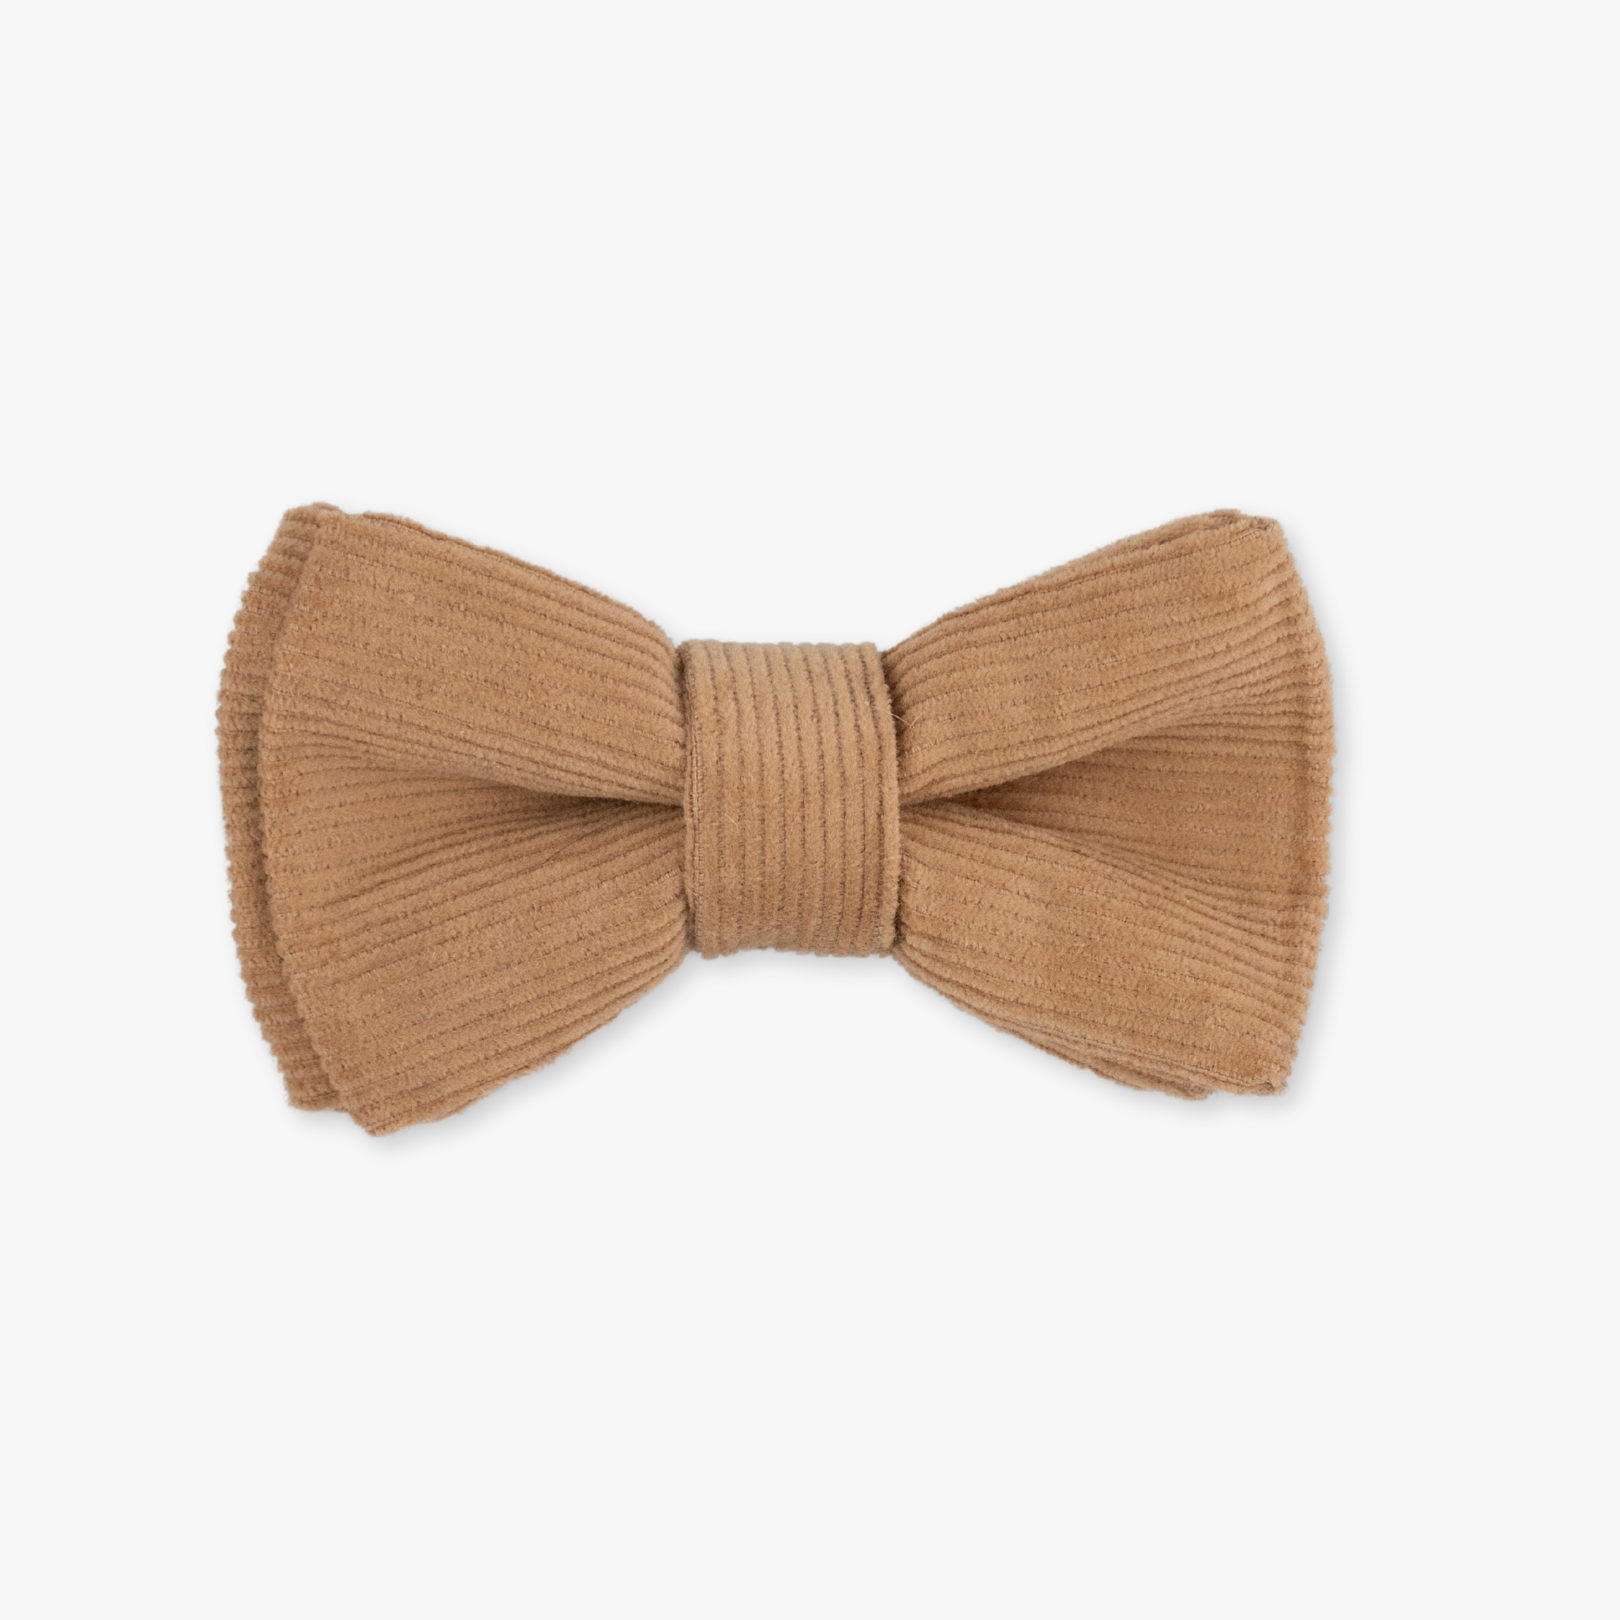 Corduroy dog bow tie